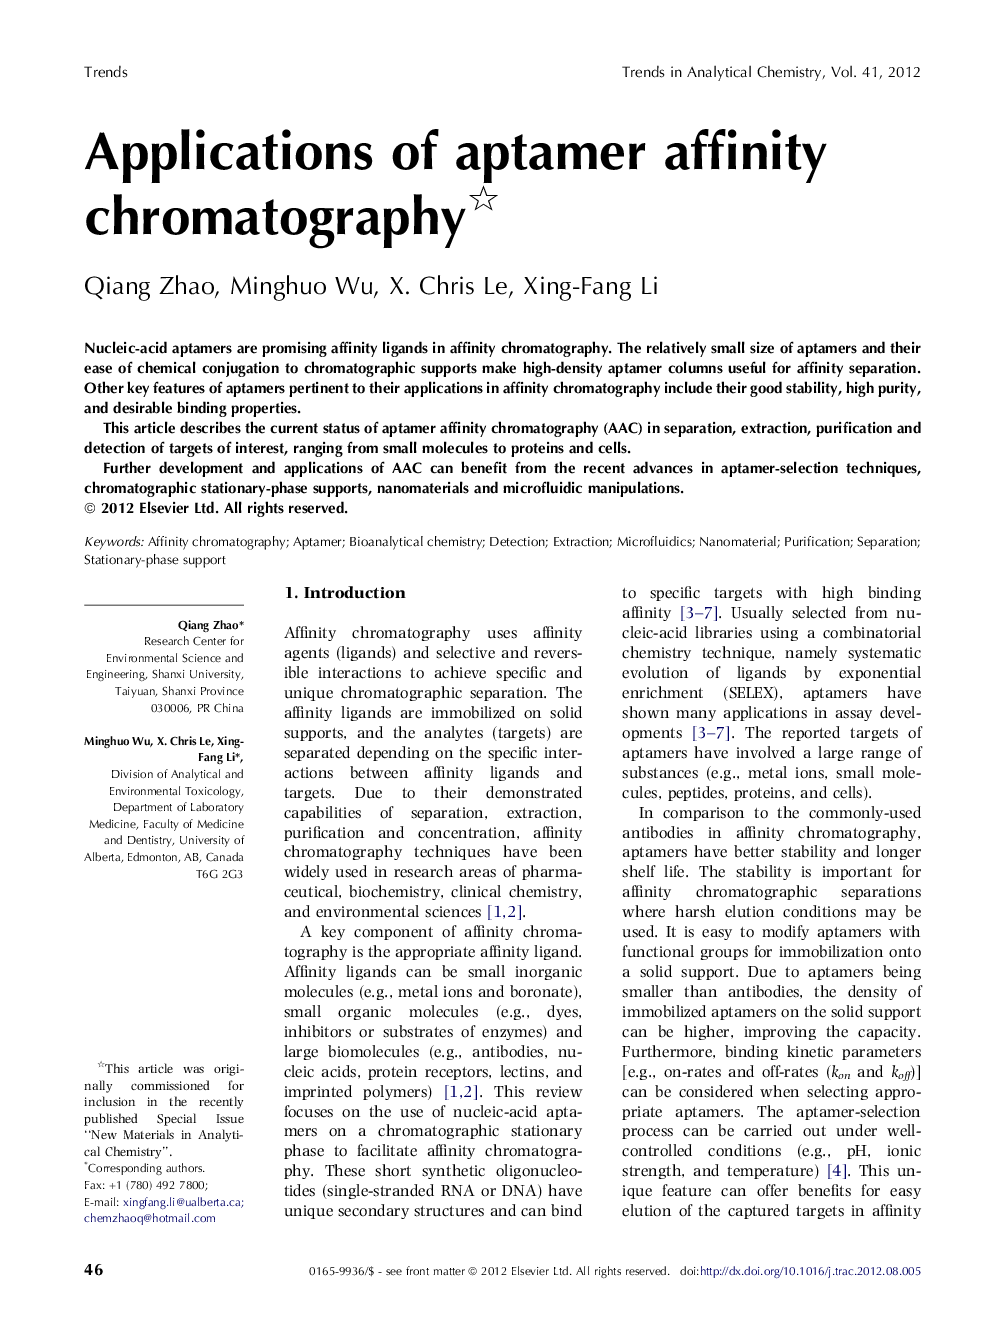 Applications of aptamer affinity chromatography 